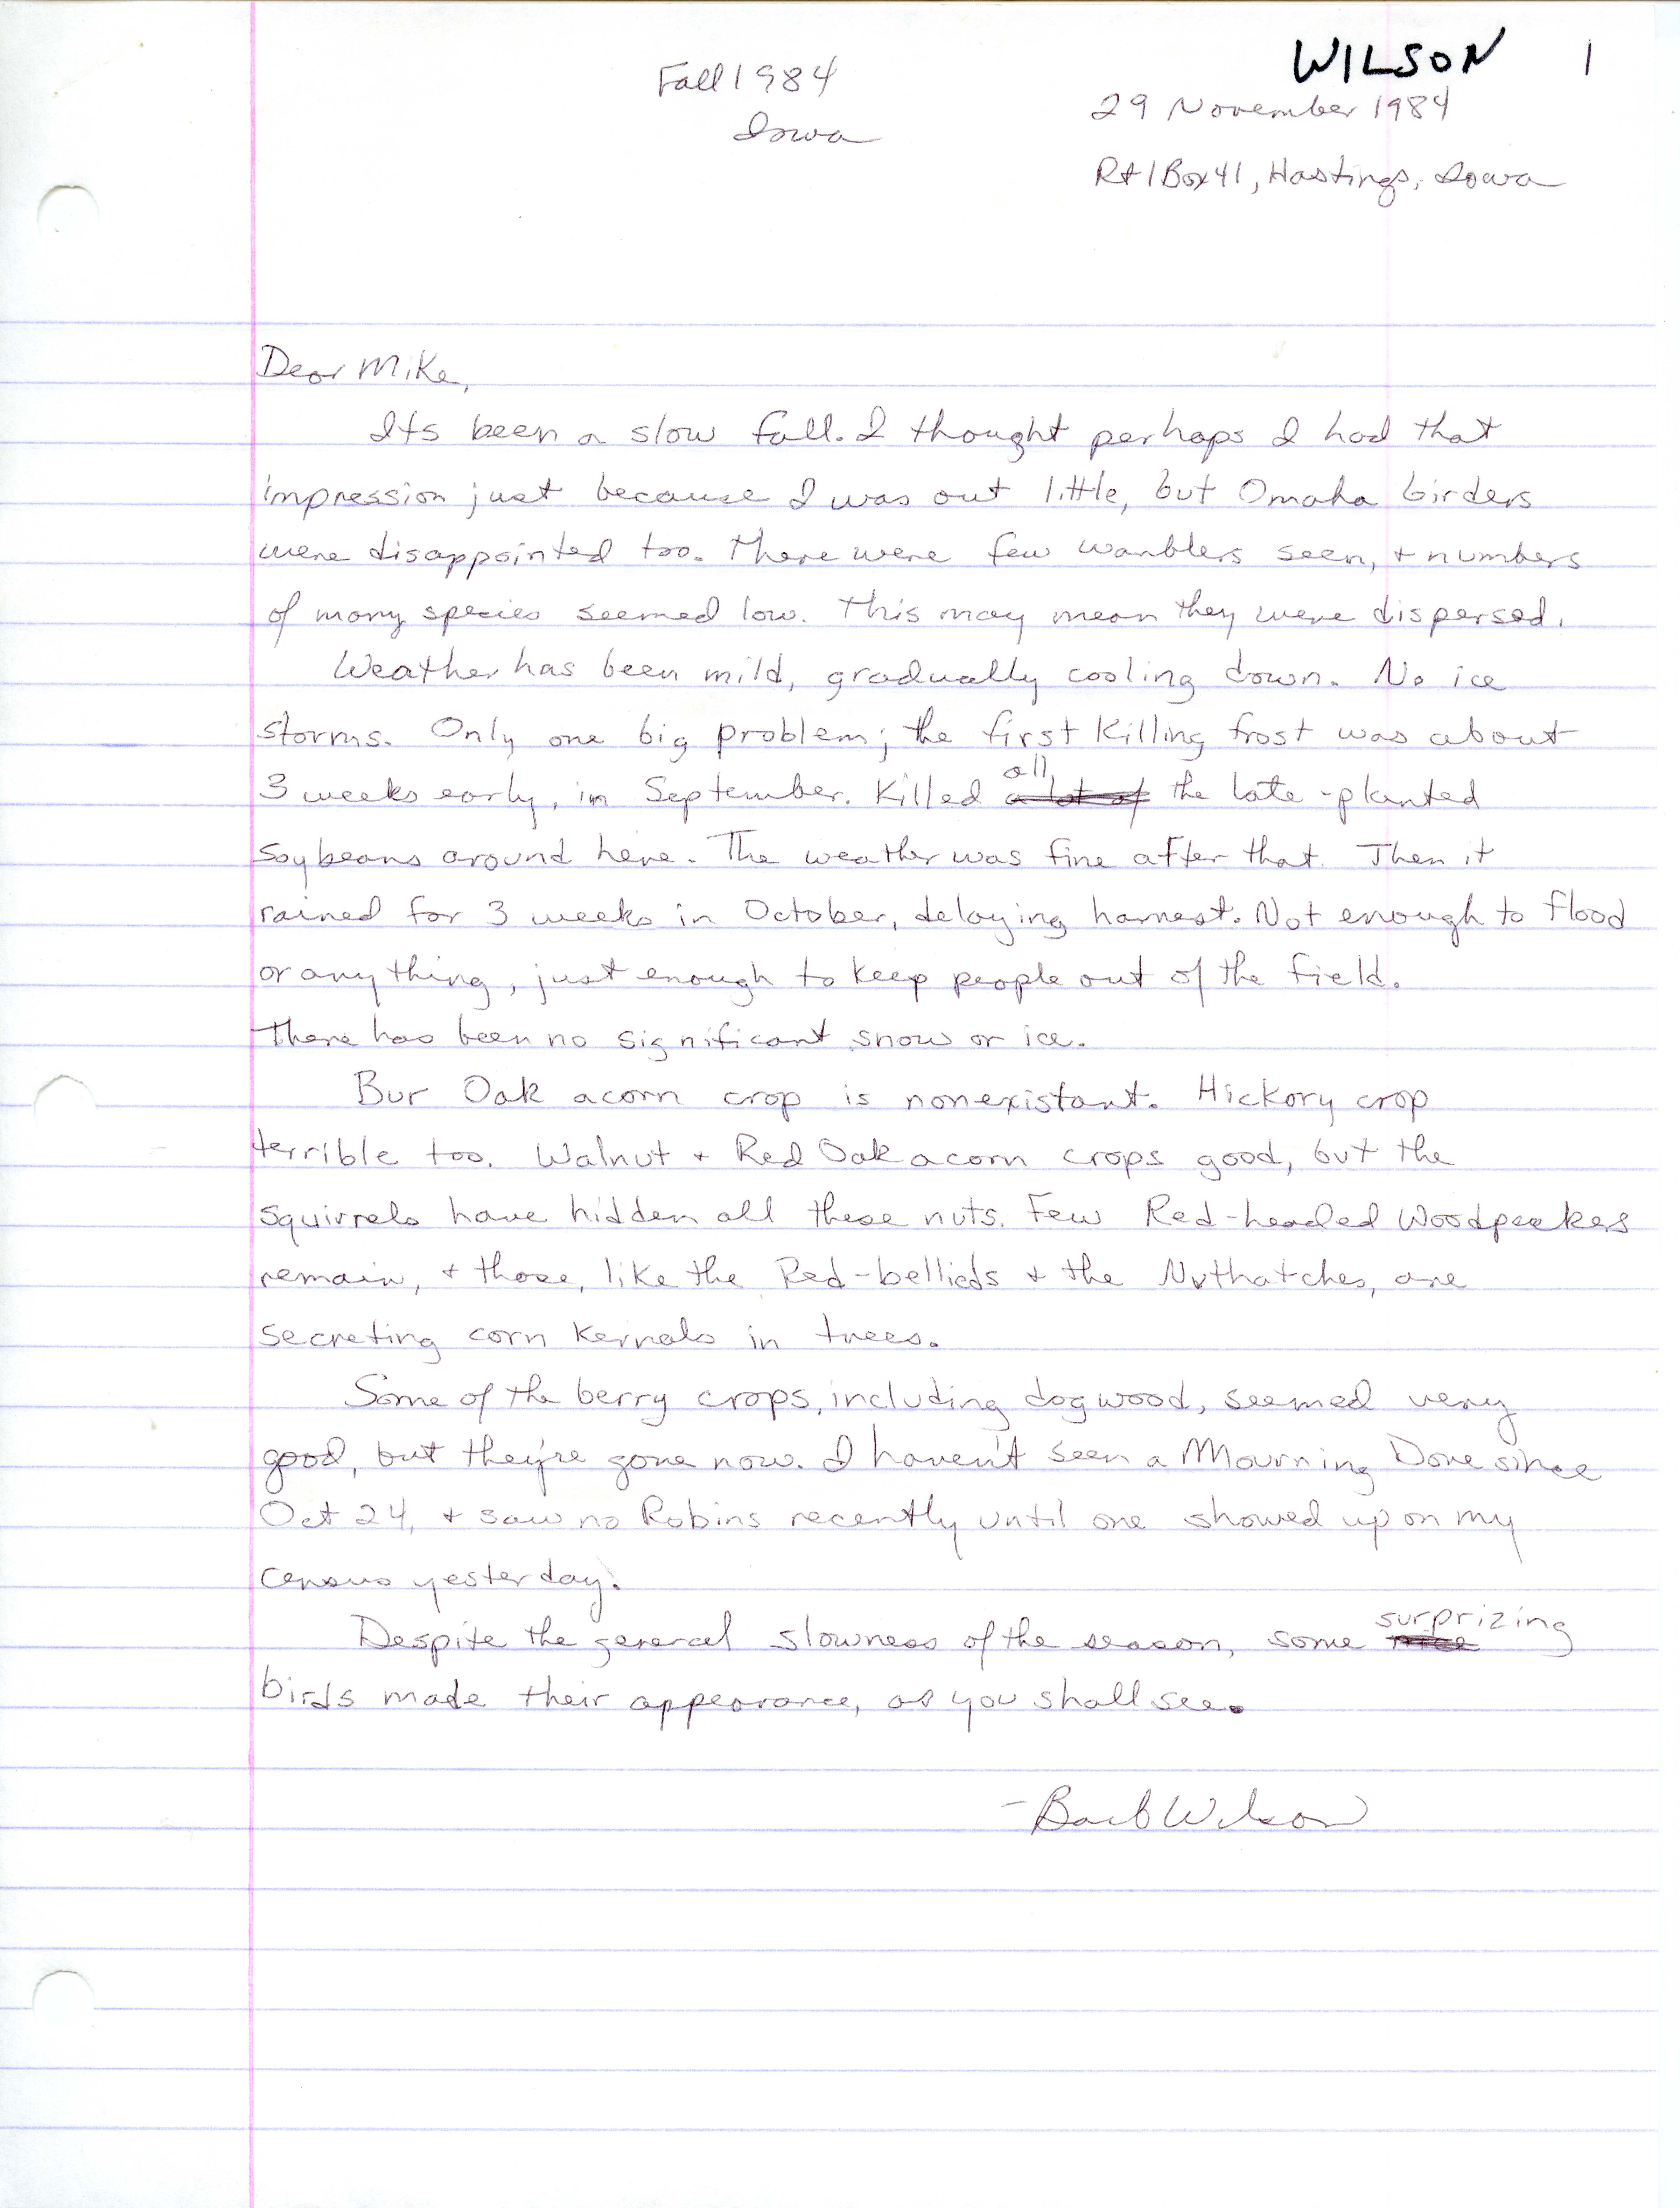 Barbara  L. Wilson letter and field notes to Michael C. Newlon regarding fall 1984 bird sightings, November 29, 1984